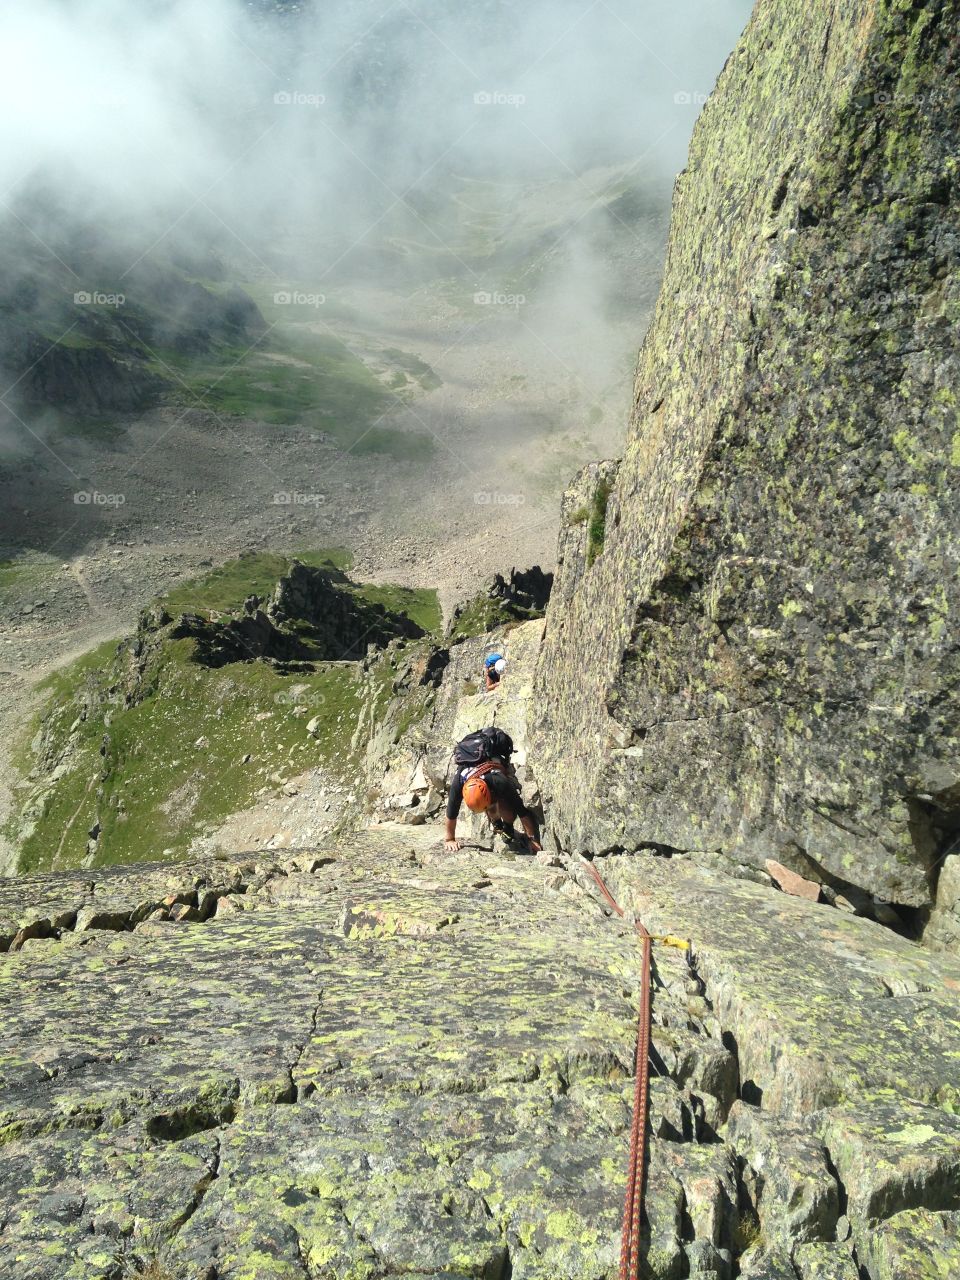 Climbing exposure. Taken on a recent climbing trip